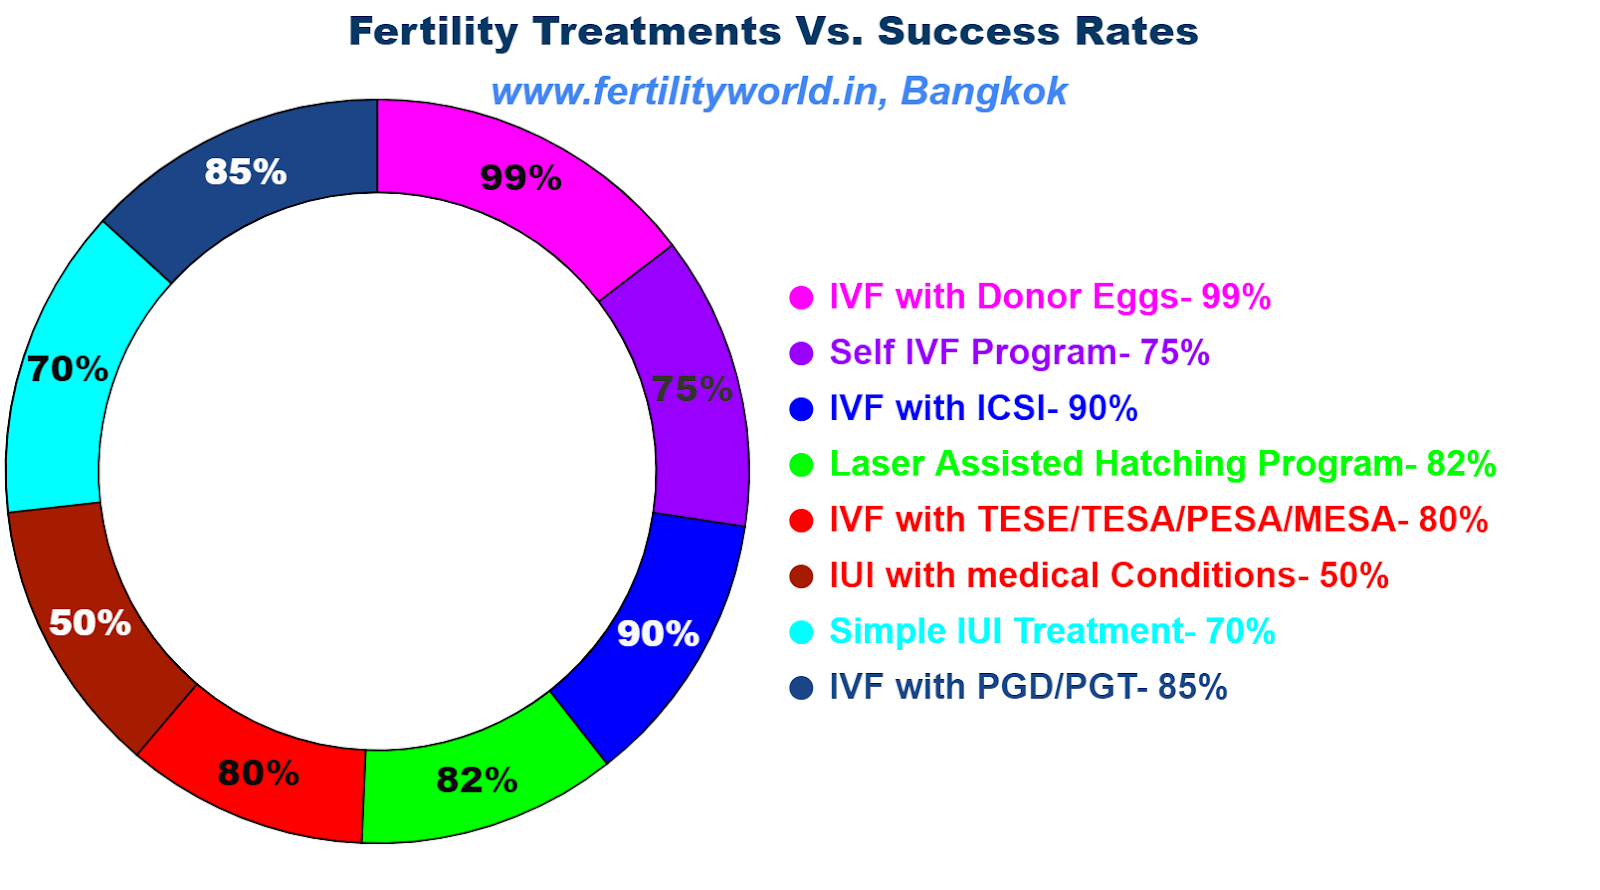 IVF success rates in Bangkok